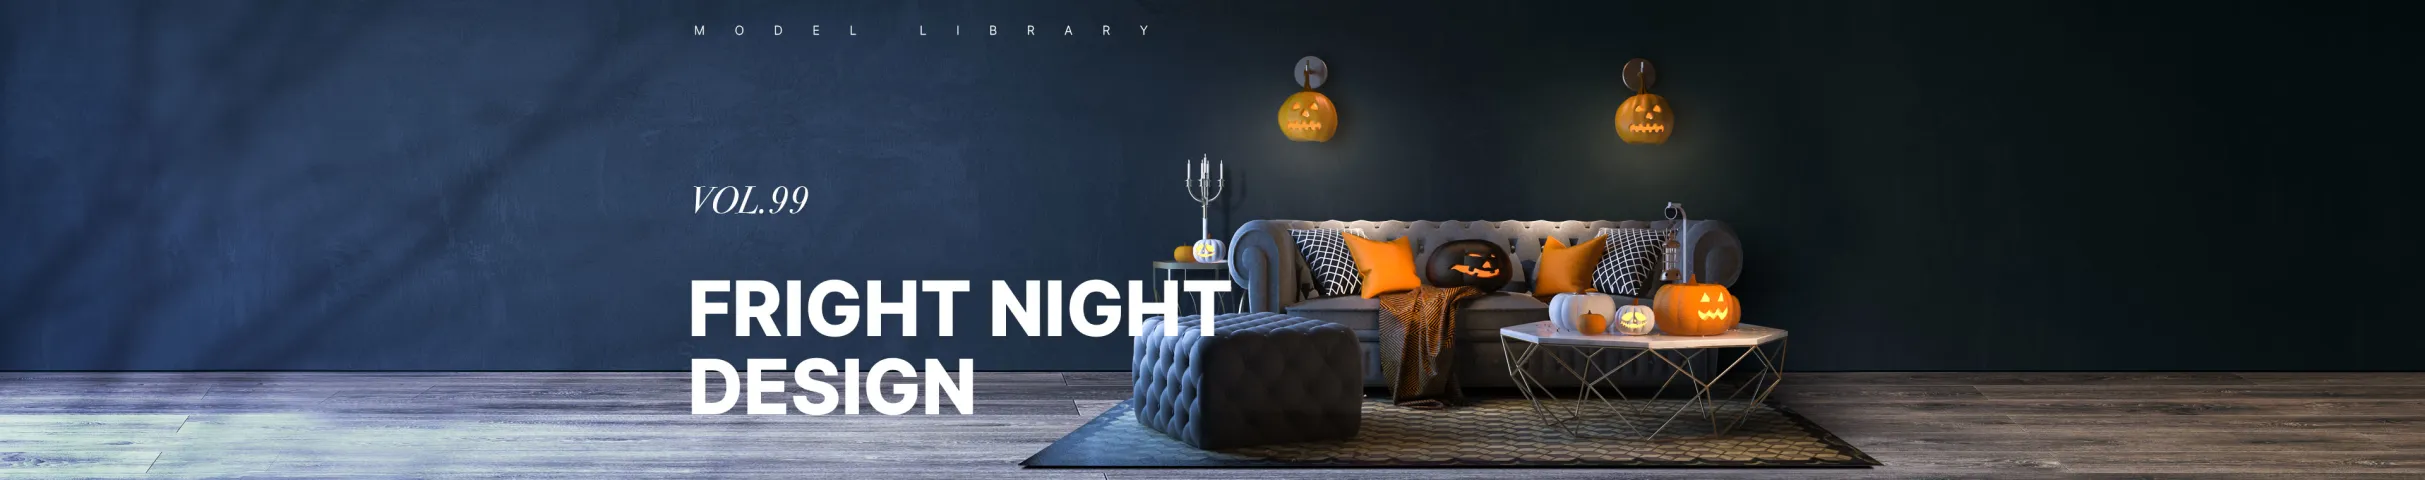 Fright Night Design